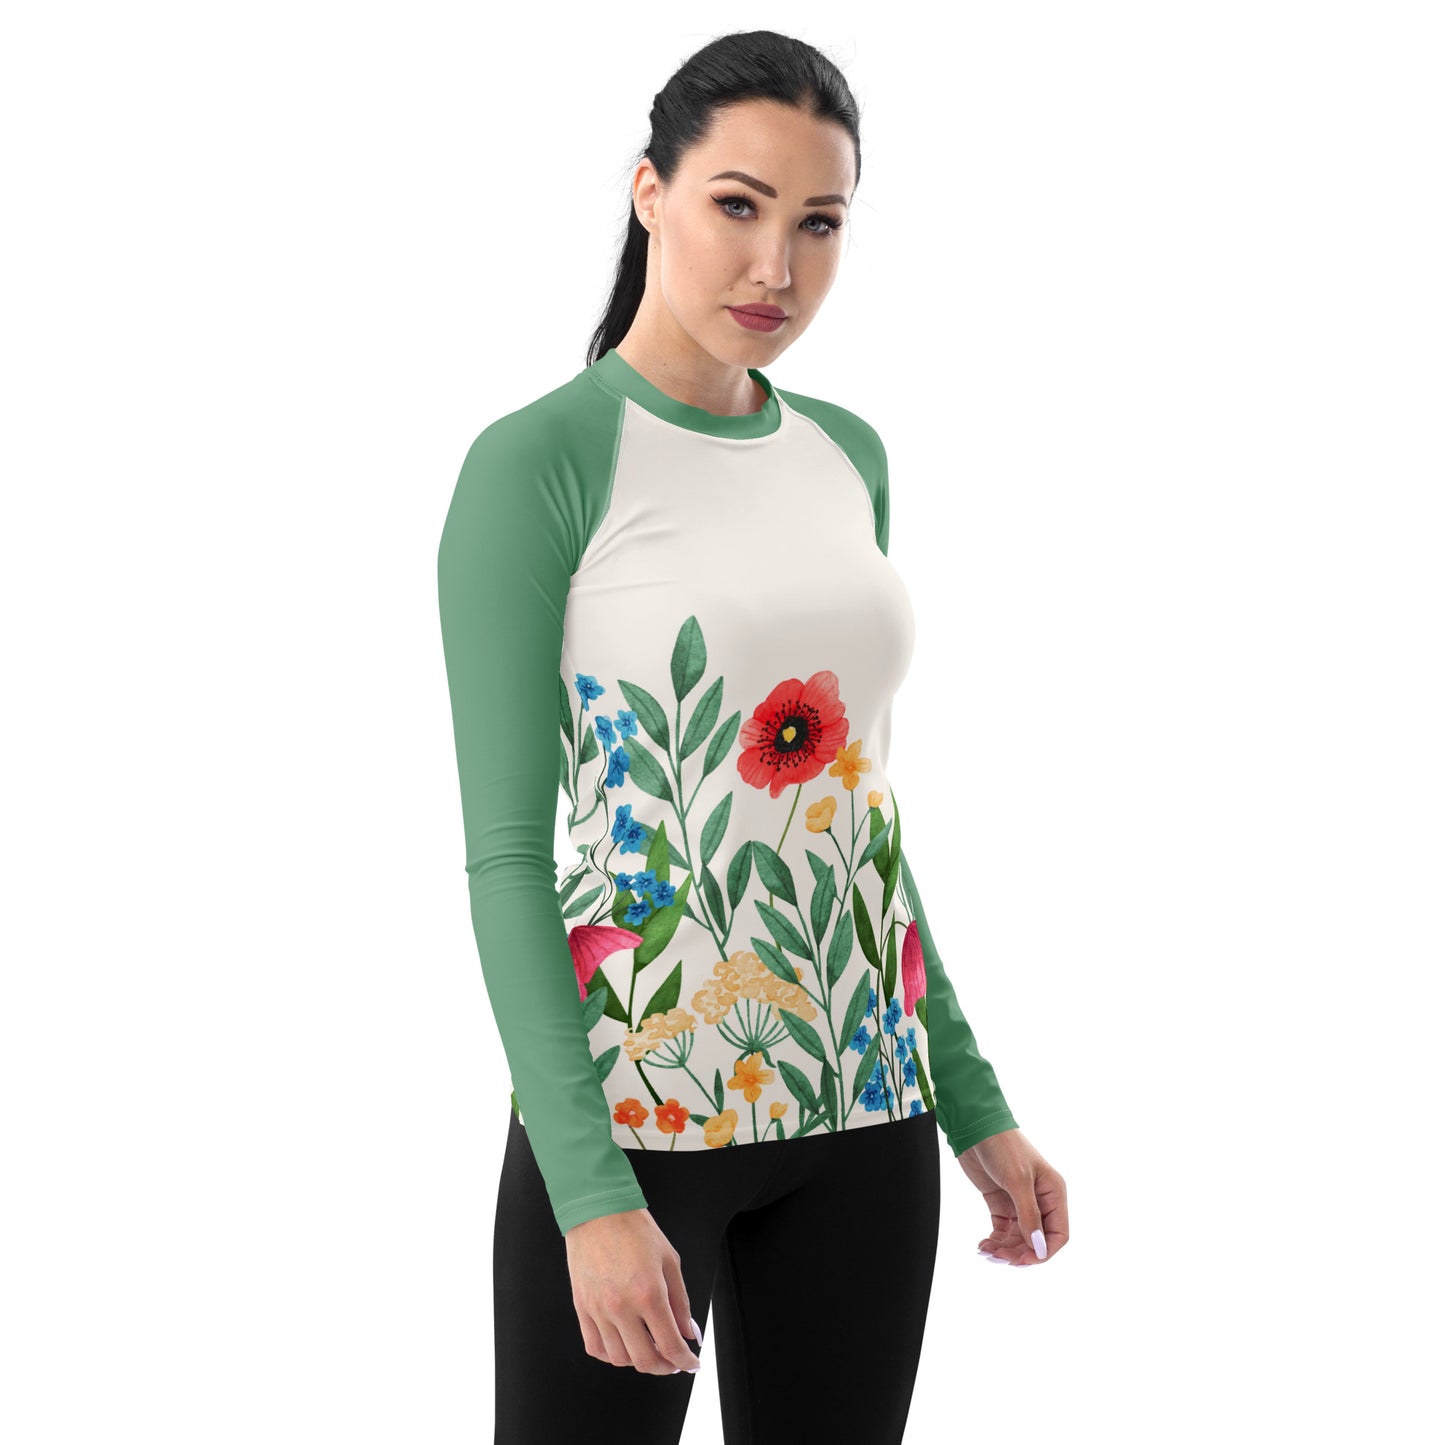 Wild Flowers Women's Rash Guard, Floral Green Print Surf Long Sleeve Swim Shirt Swimwear Sun Protection Jiu Jitsu Designer Suit UPF Cover